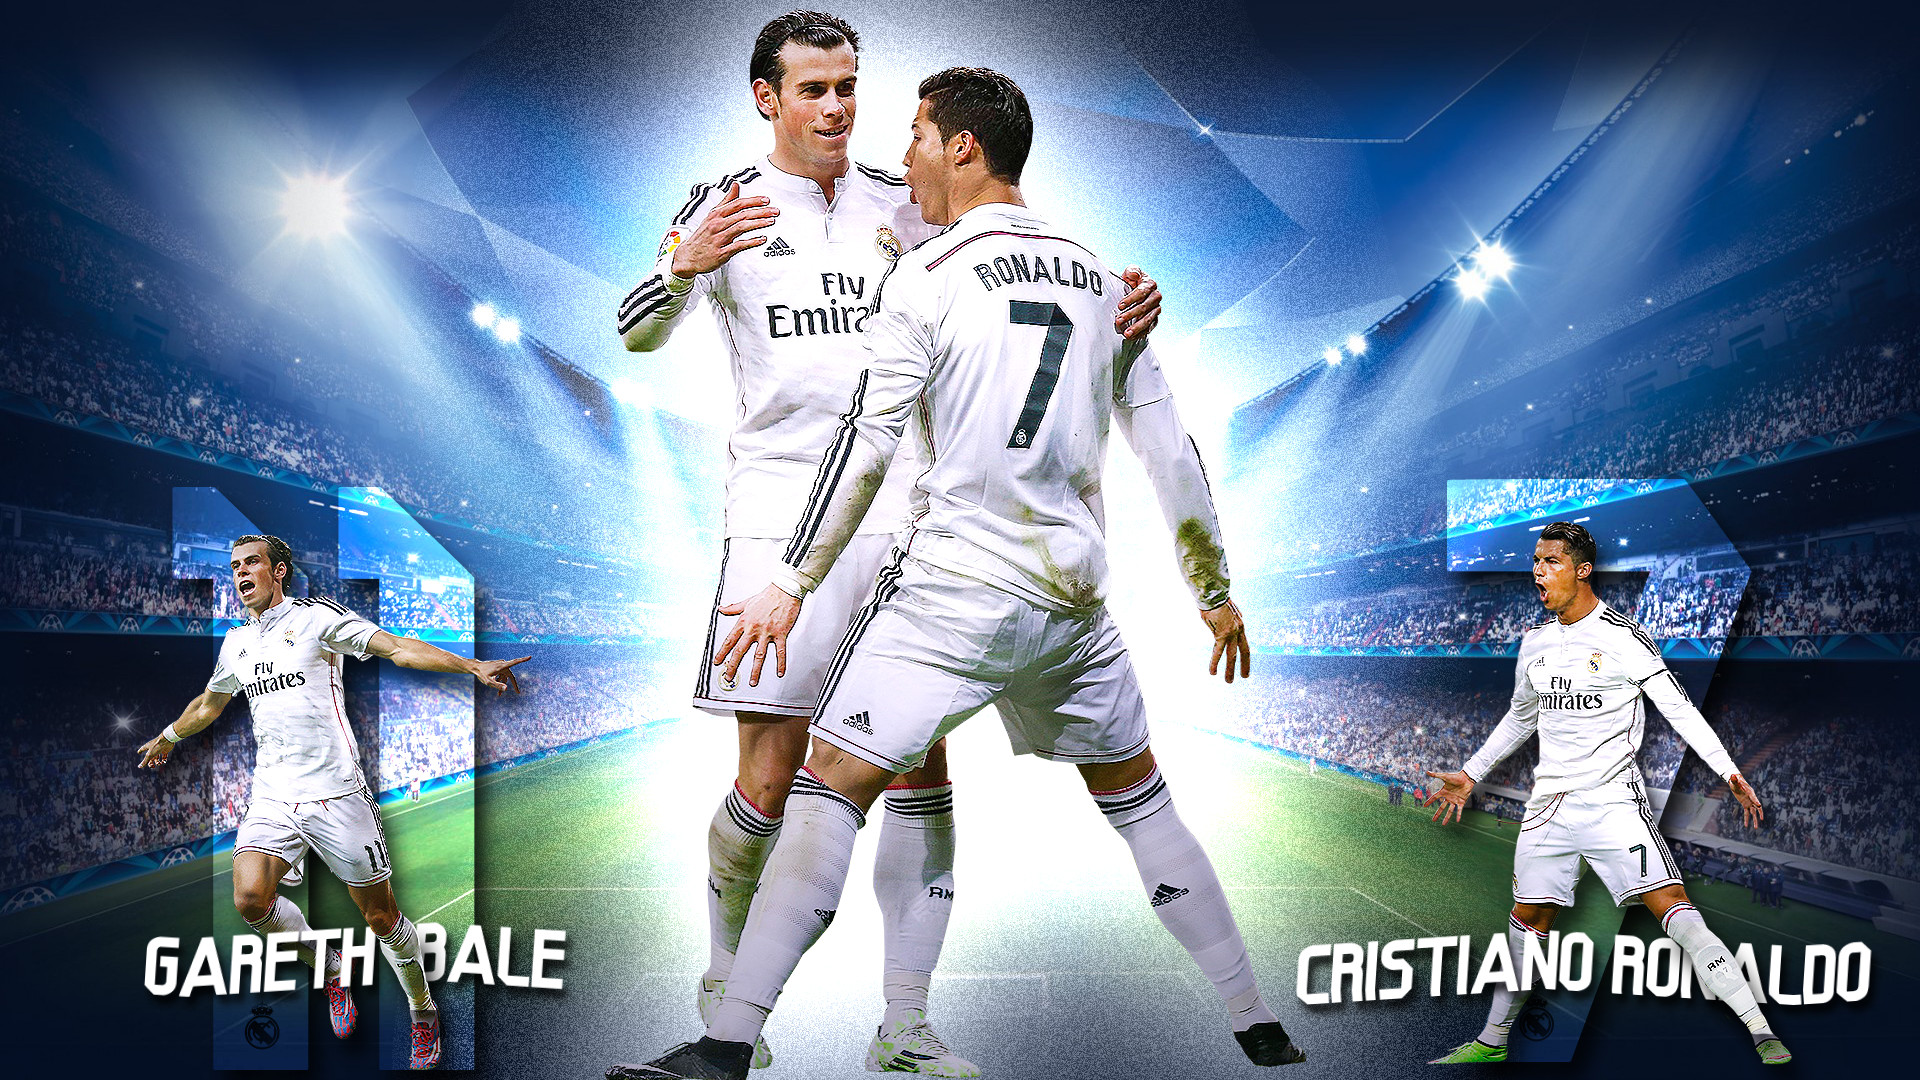 1920x1080 ... Gareth-Bale and Cristiano-Ronaldo by szwejzi